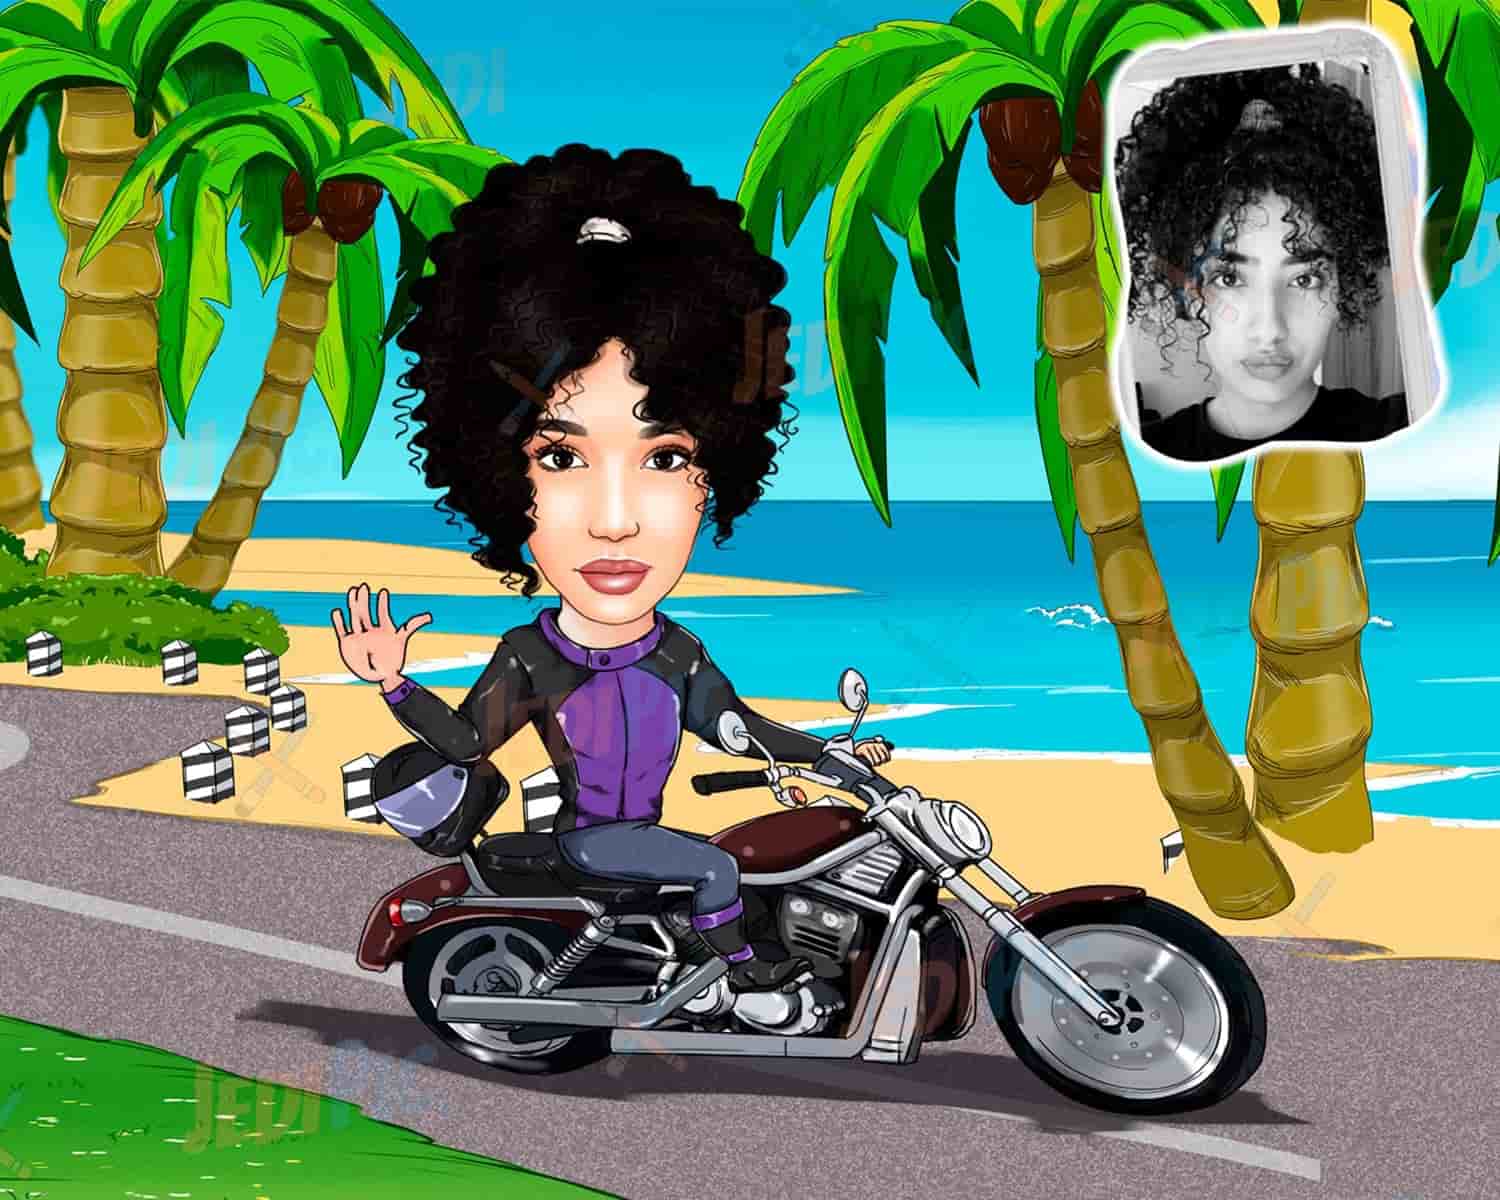 Motorbike Rider Cartoon Portrait in Digital Style